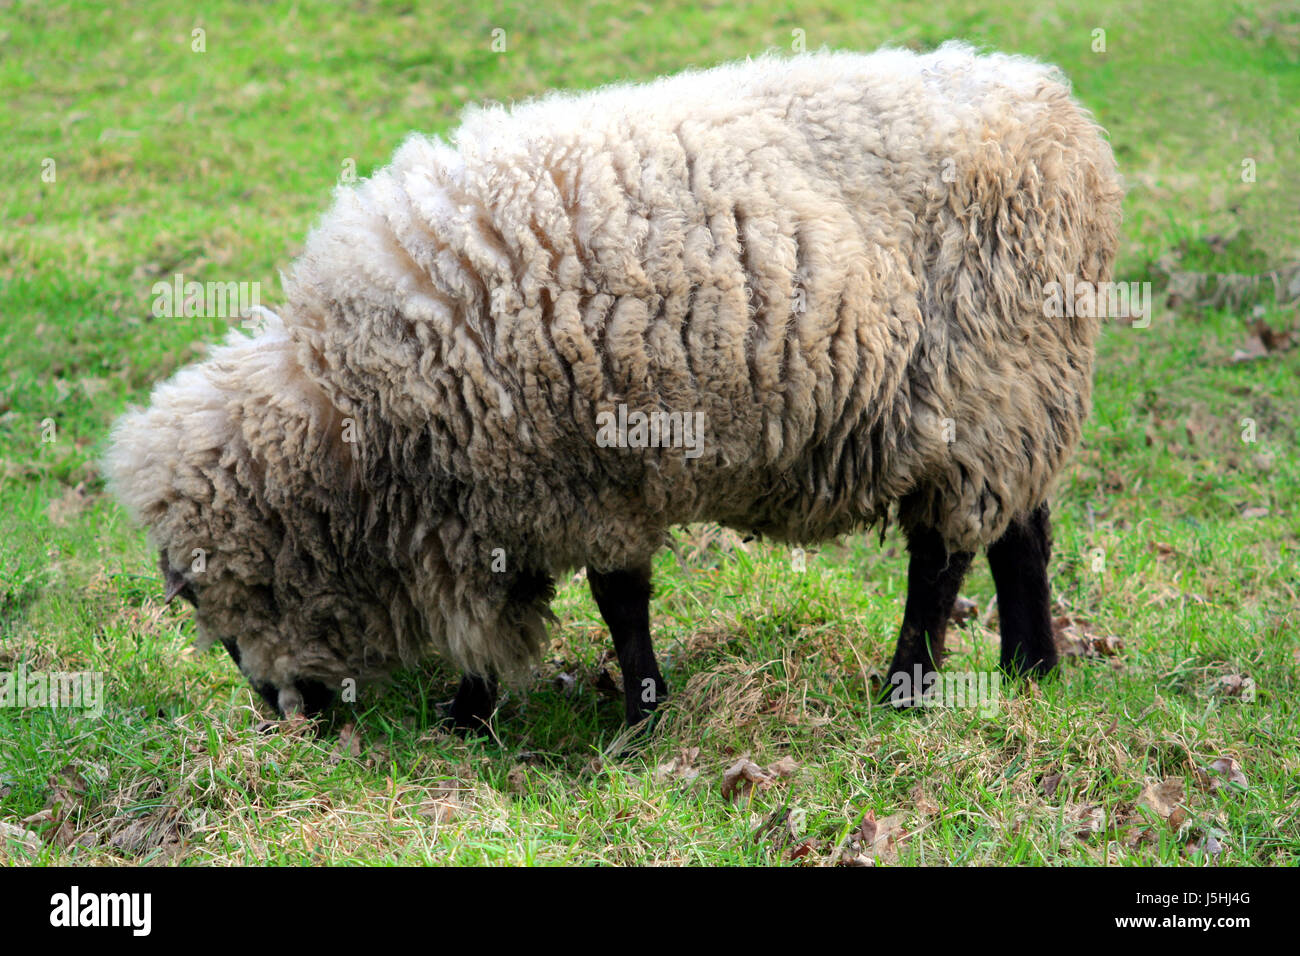 skin sheep wool shearing raw material regenerative textiles frilled sheepskin Stock Photo